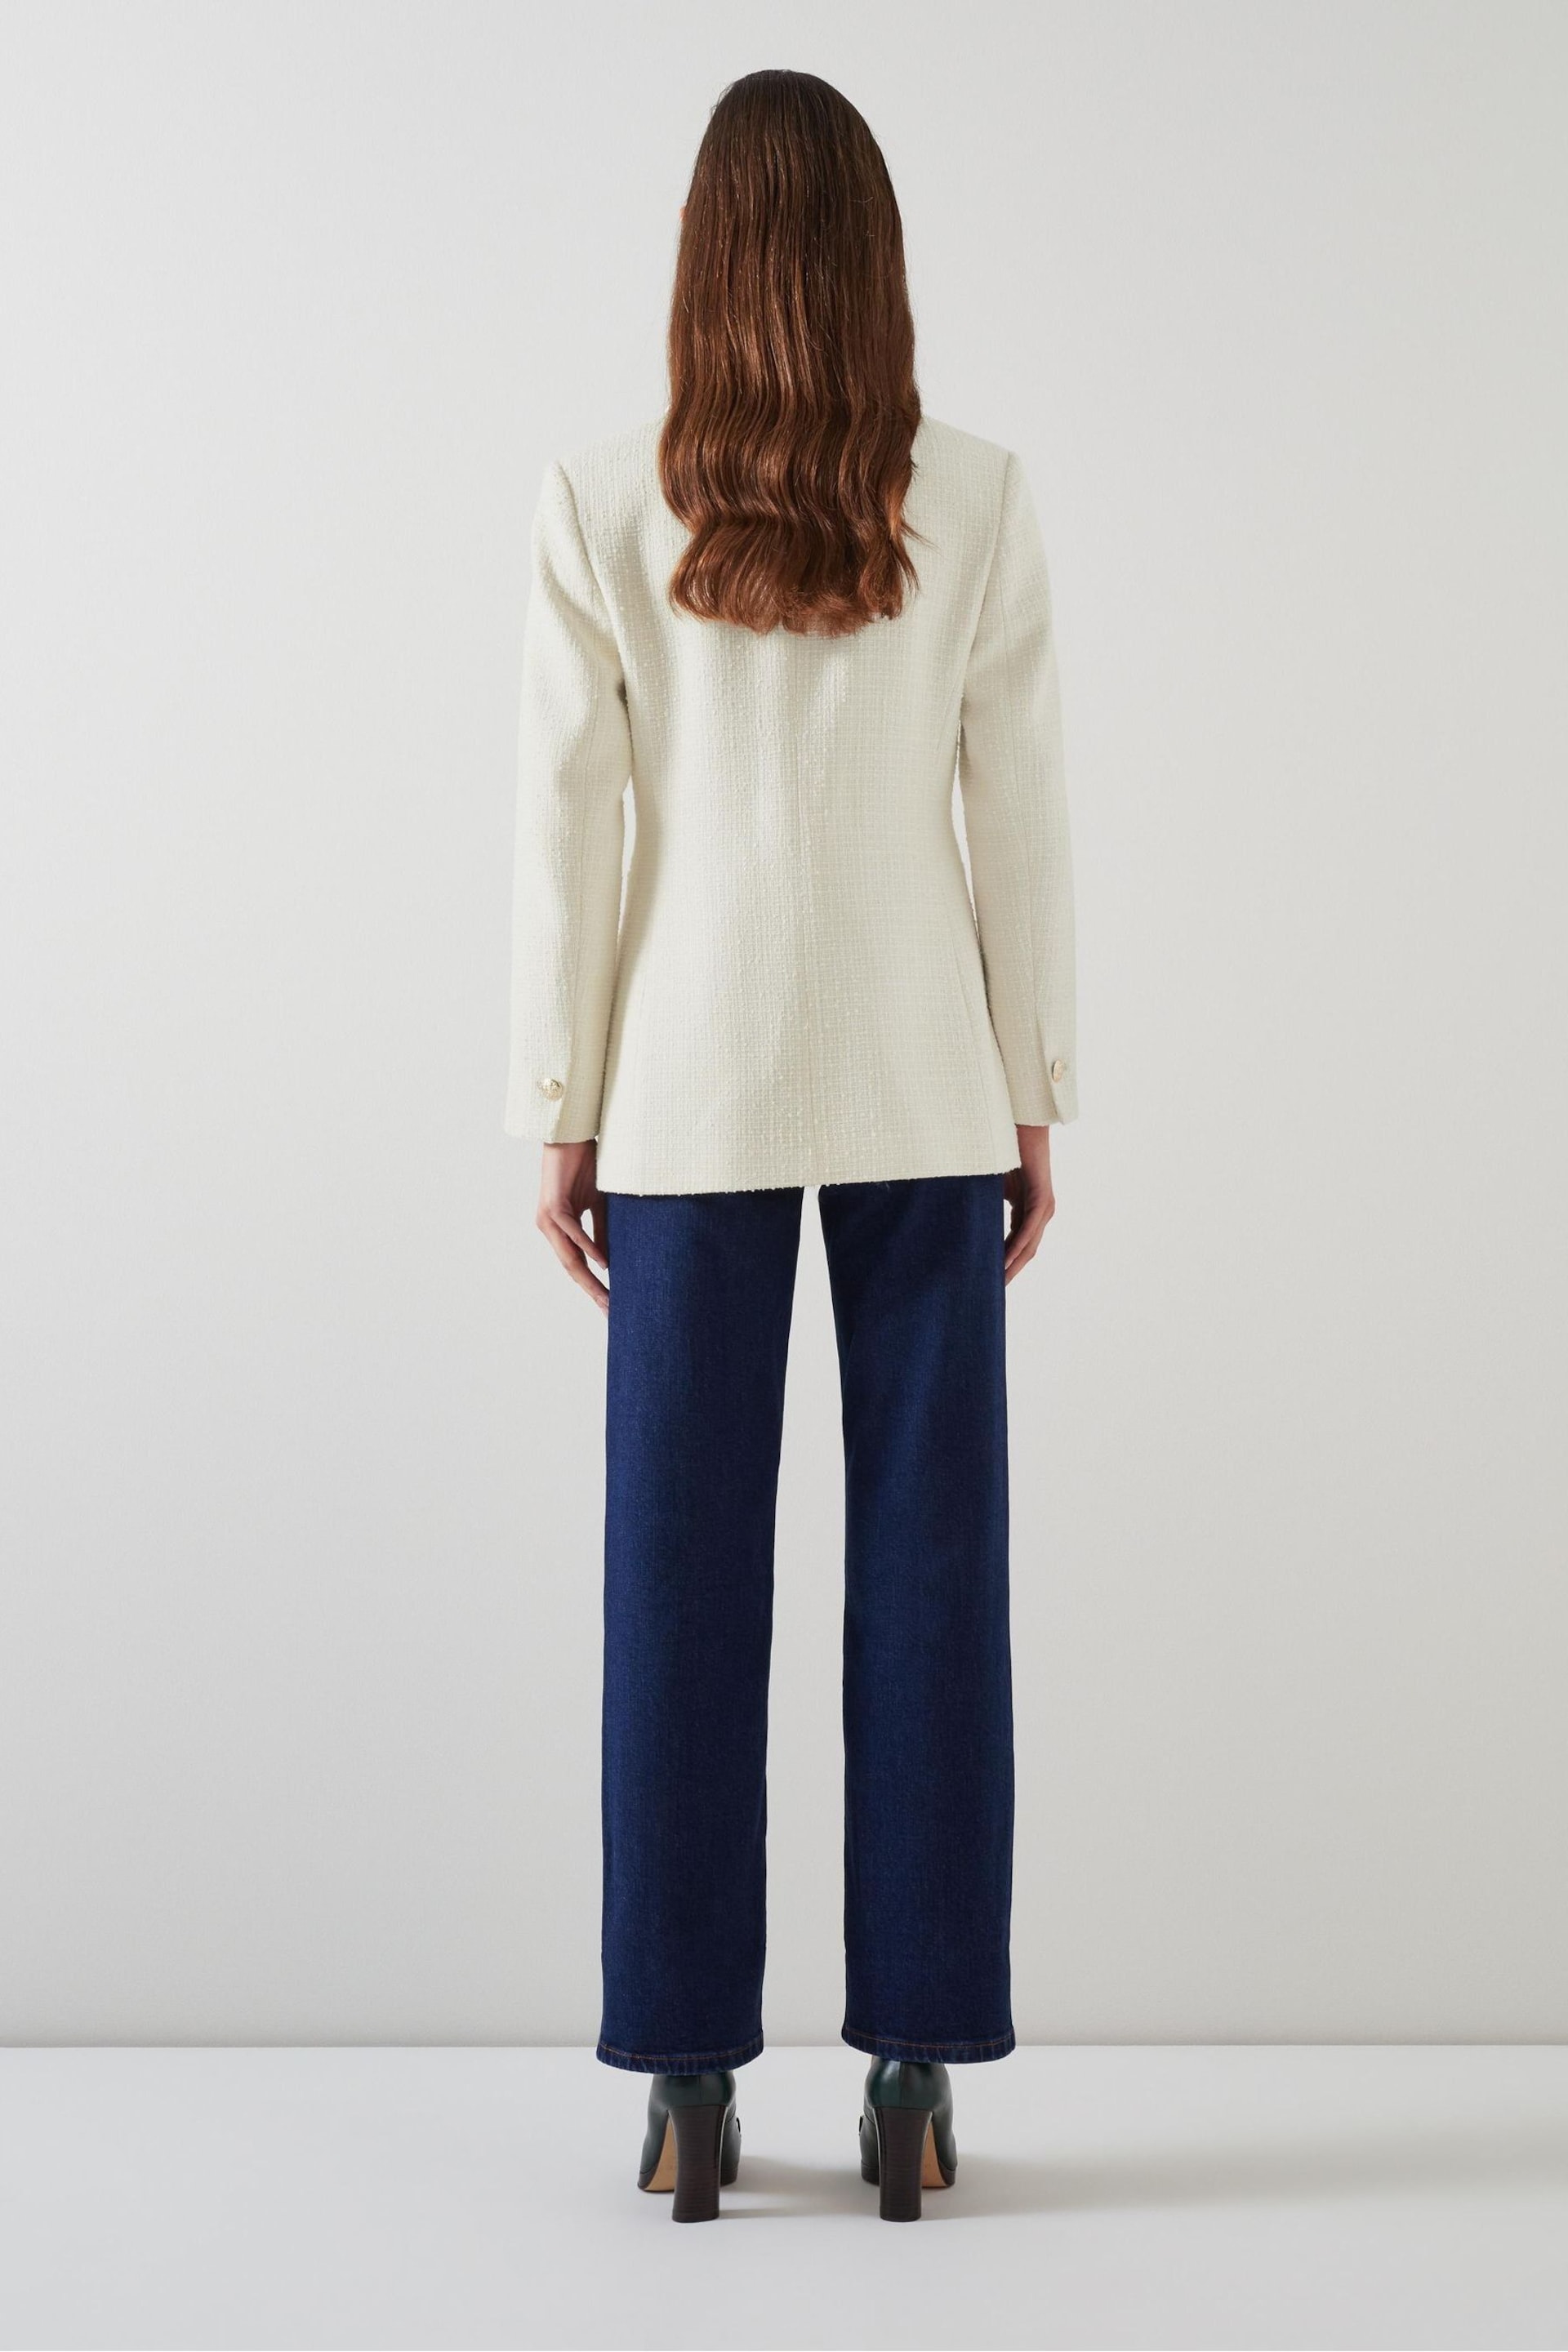 LK Bennett Mariner Italian Cotton-Blend Tweed Jacket - Image 2 of 3